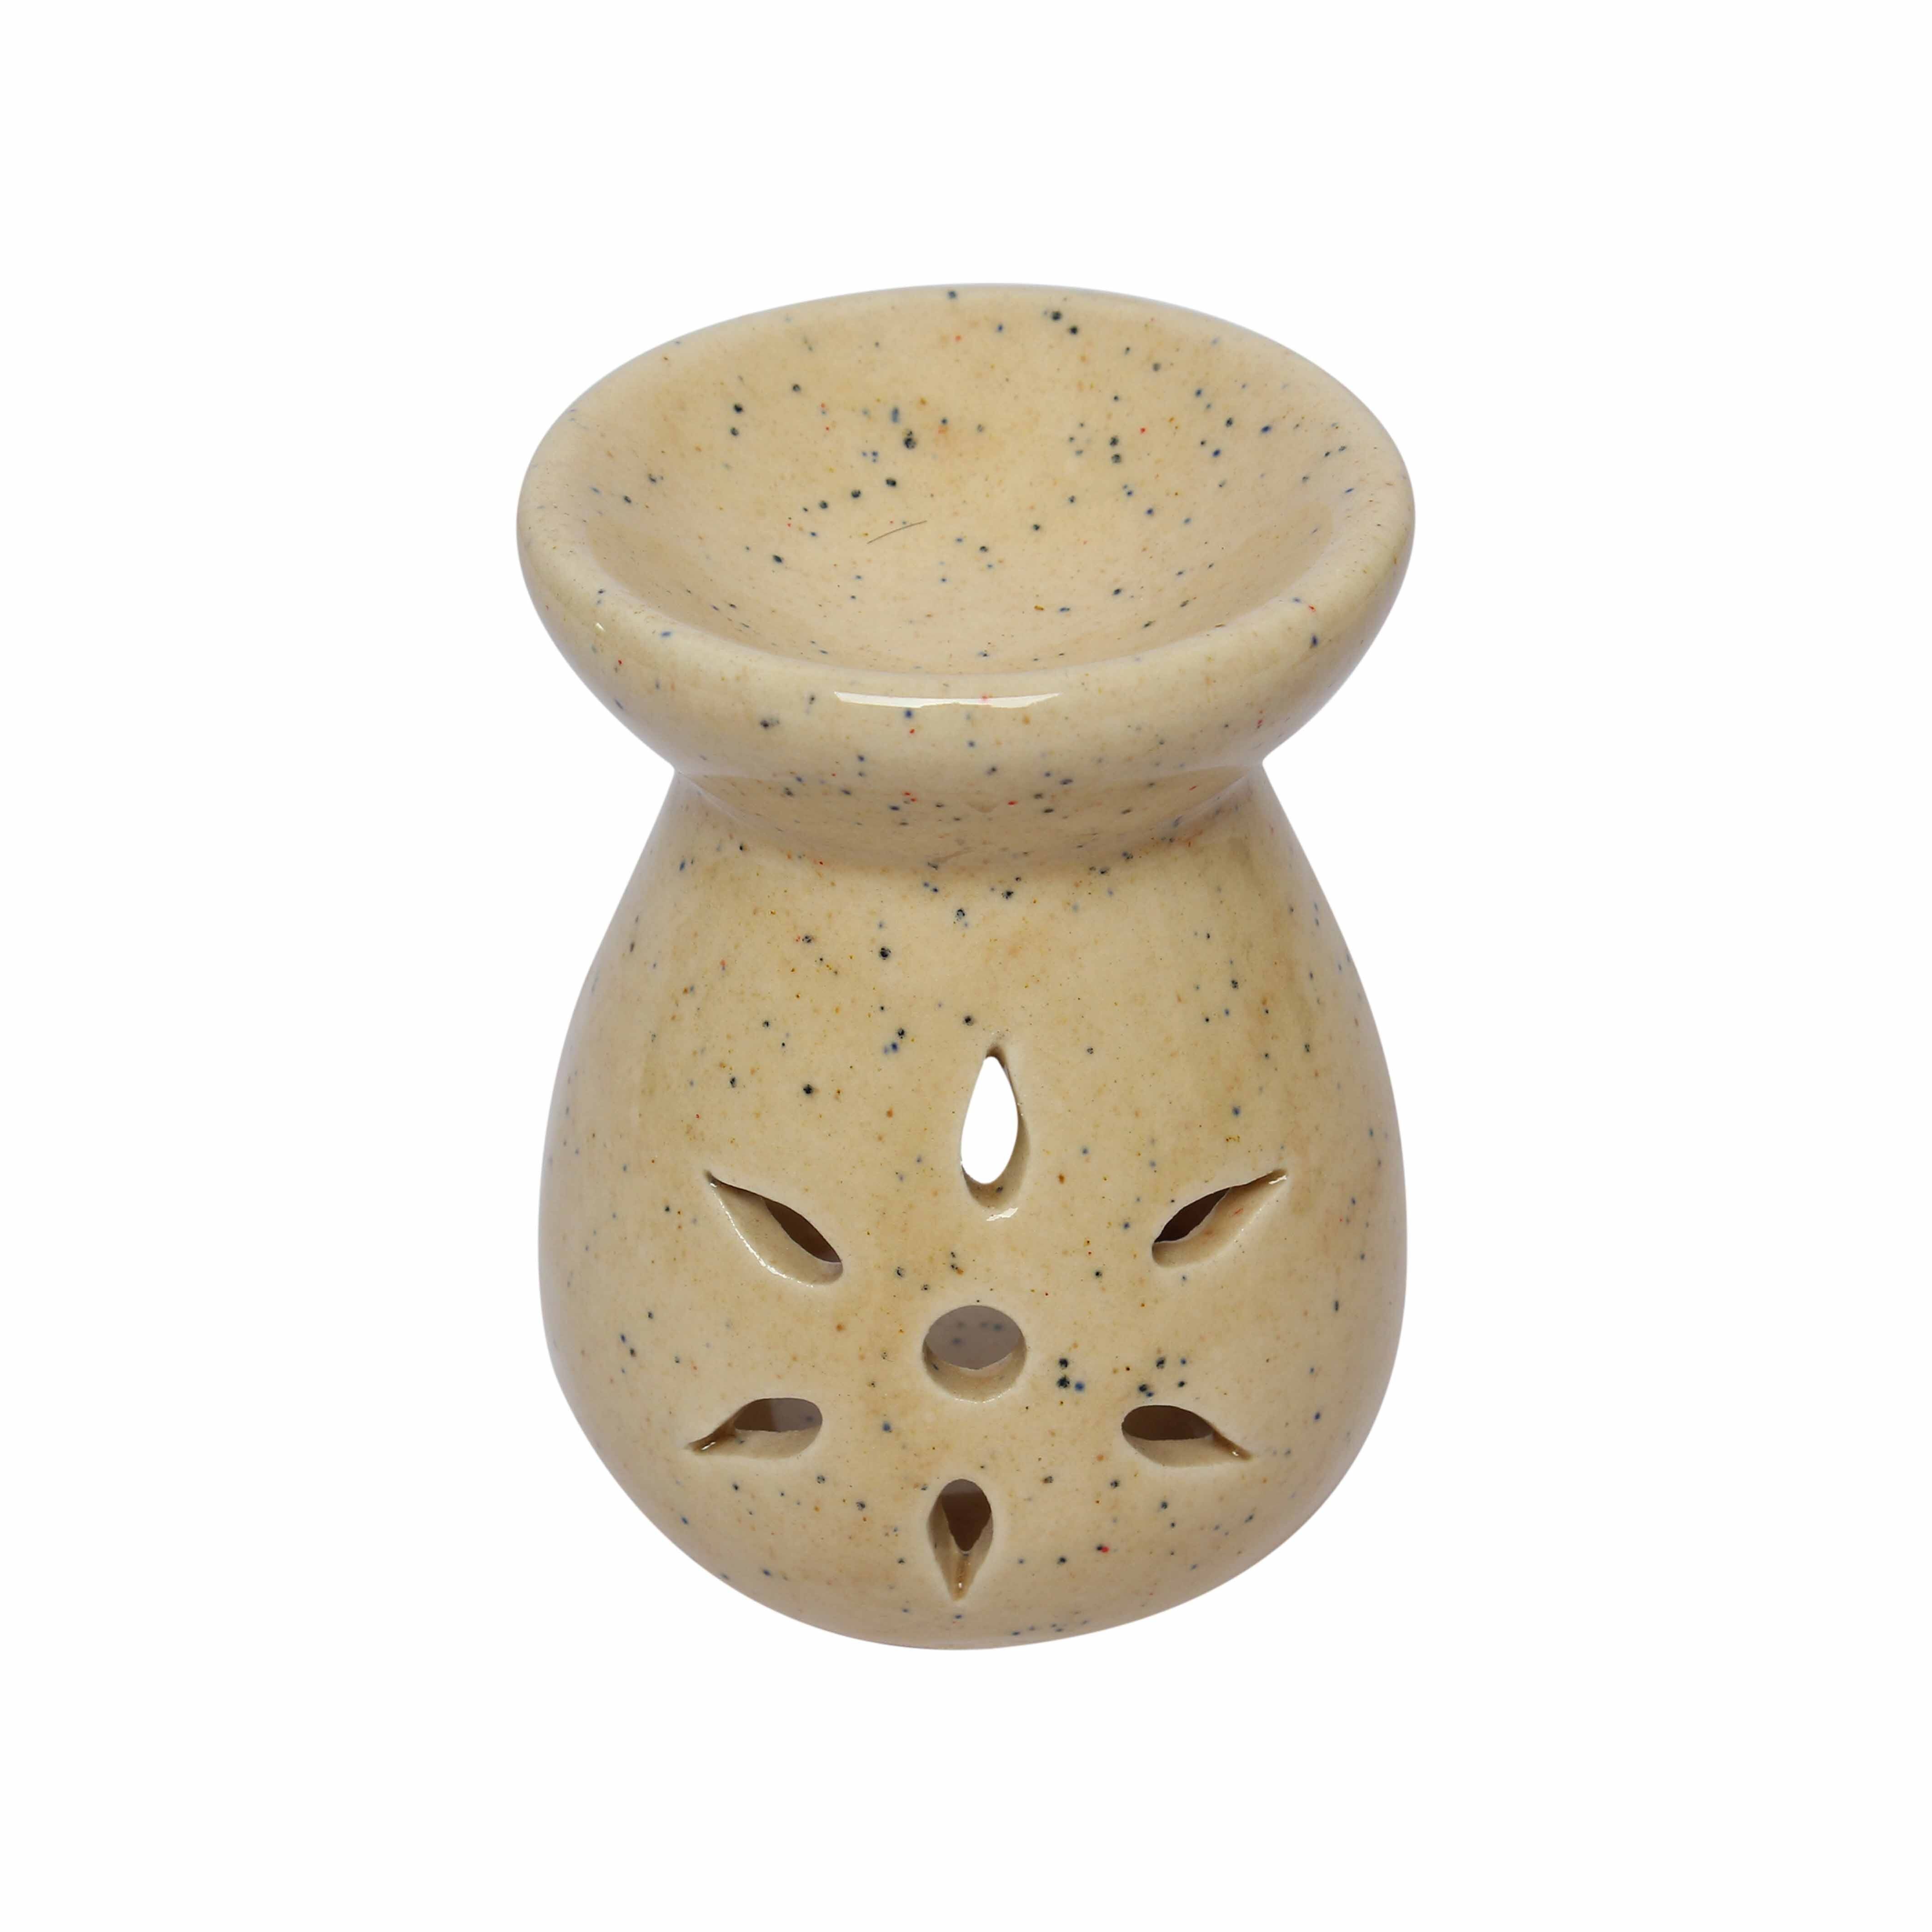 Asian Aura Ceramic Aromatic Oil Diffuser with 2 oil bottles  AA-CB-0045Bro